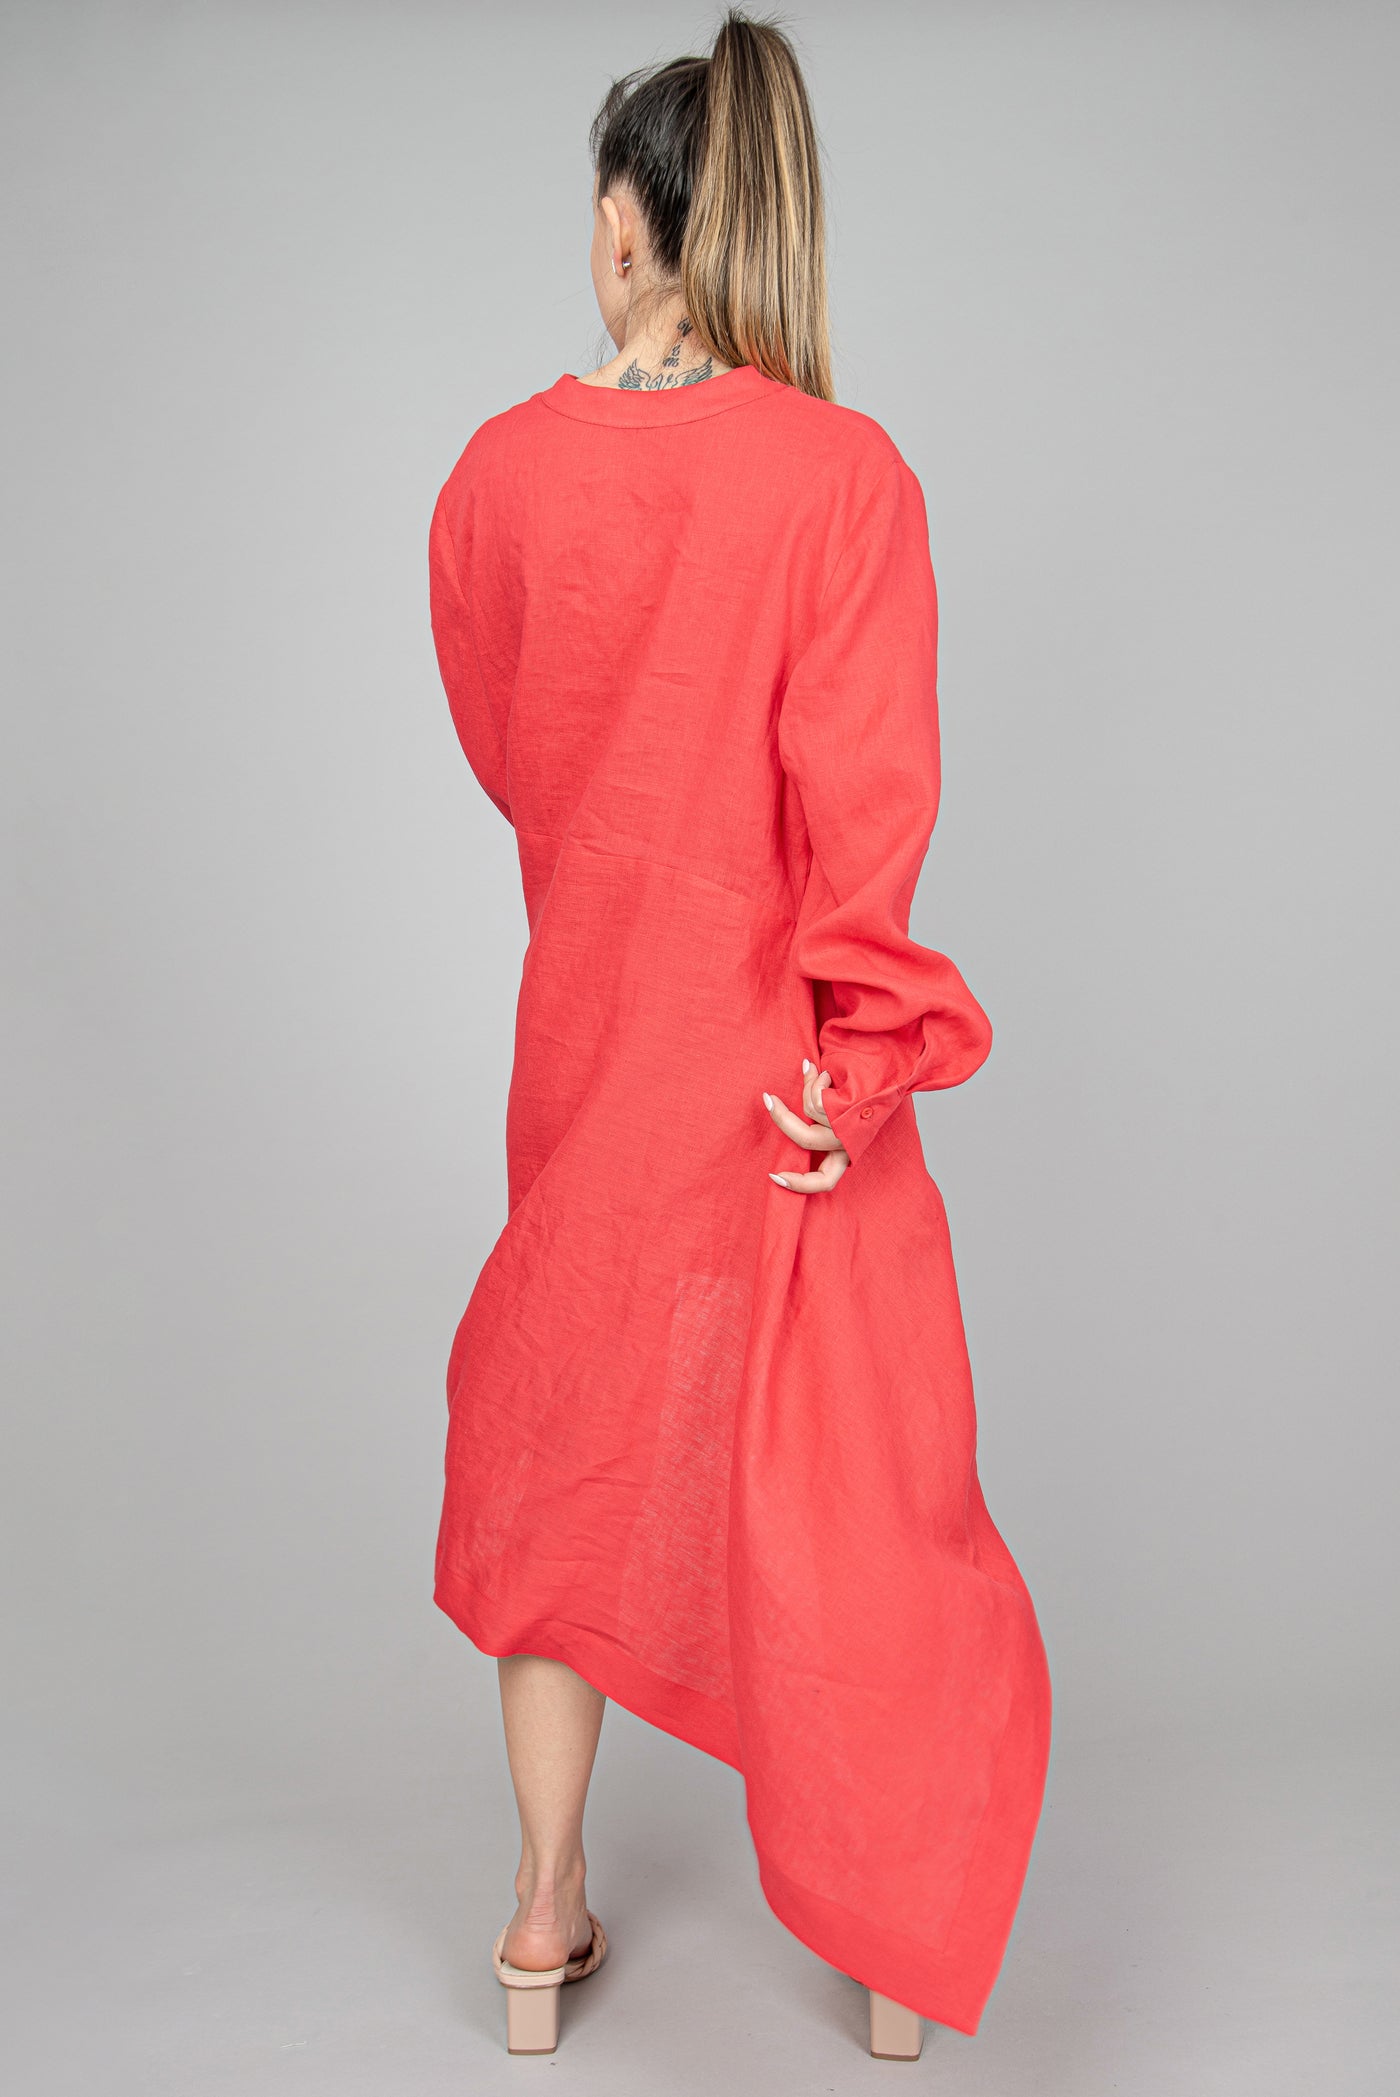 Red asymmetrical dress top F2289